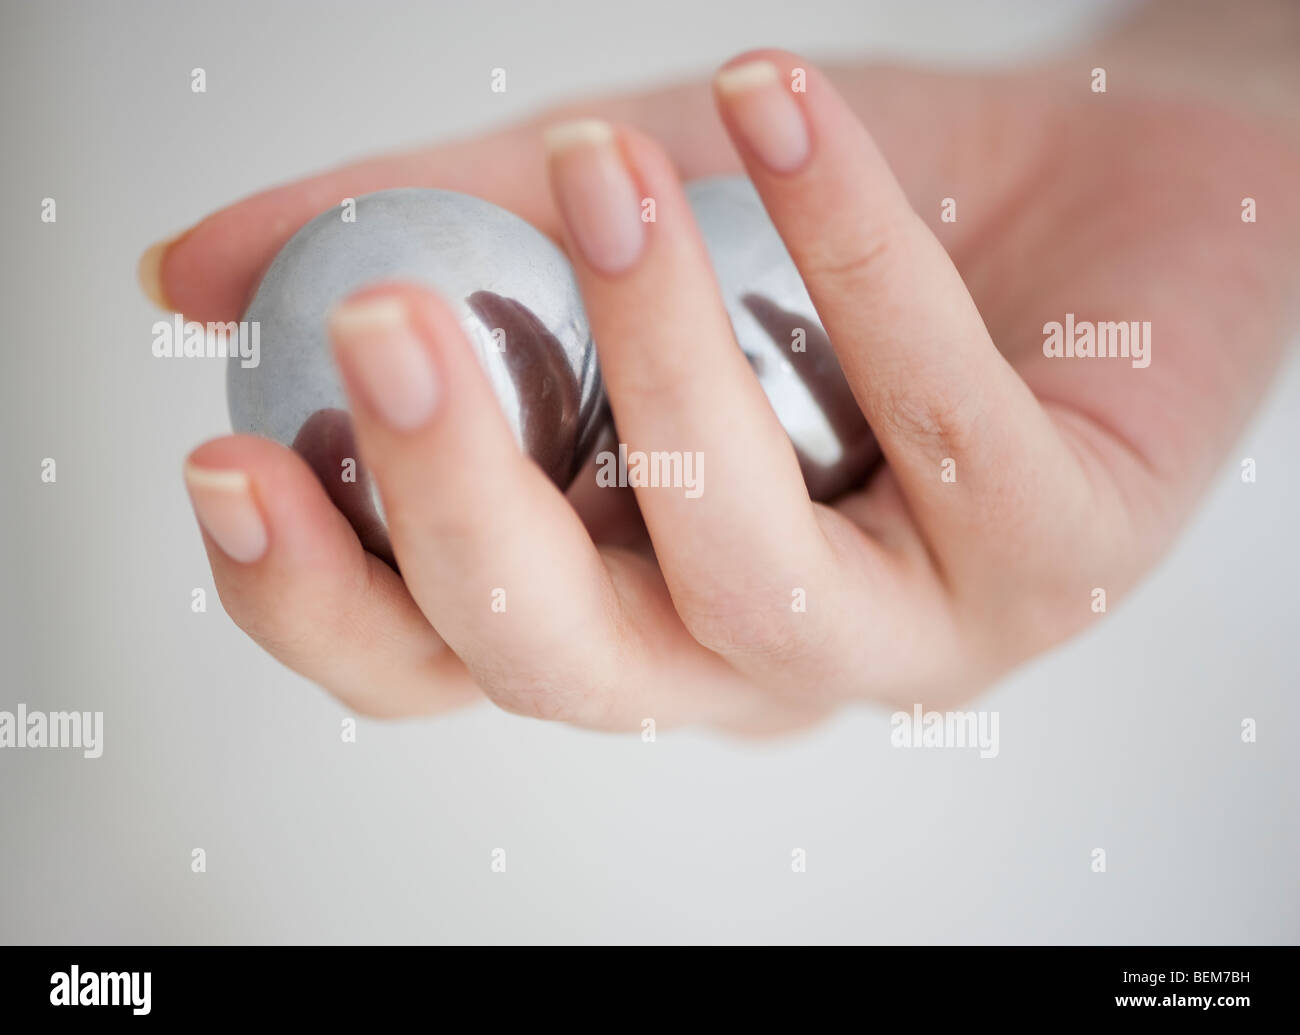 Hand holding Chinese balls Stock Photo - Alamy